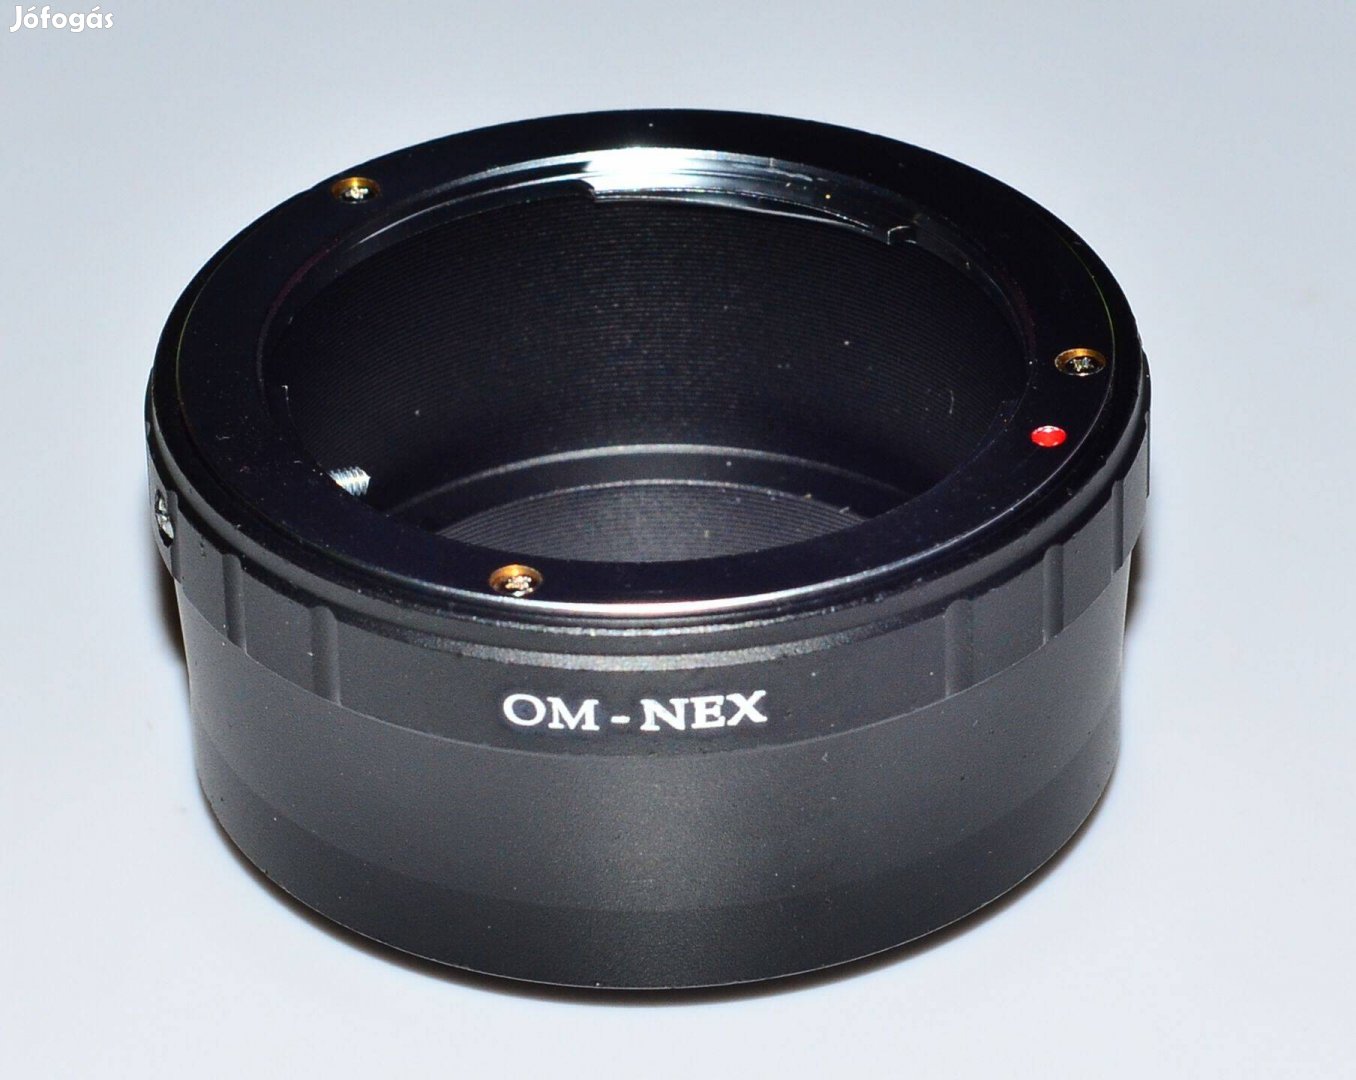 Olympus OM / Sony E (Nex) adapter